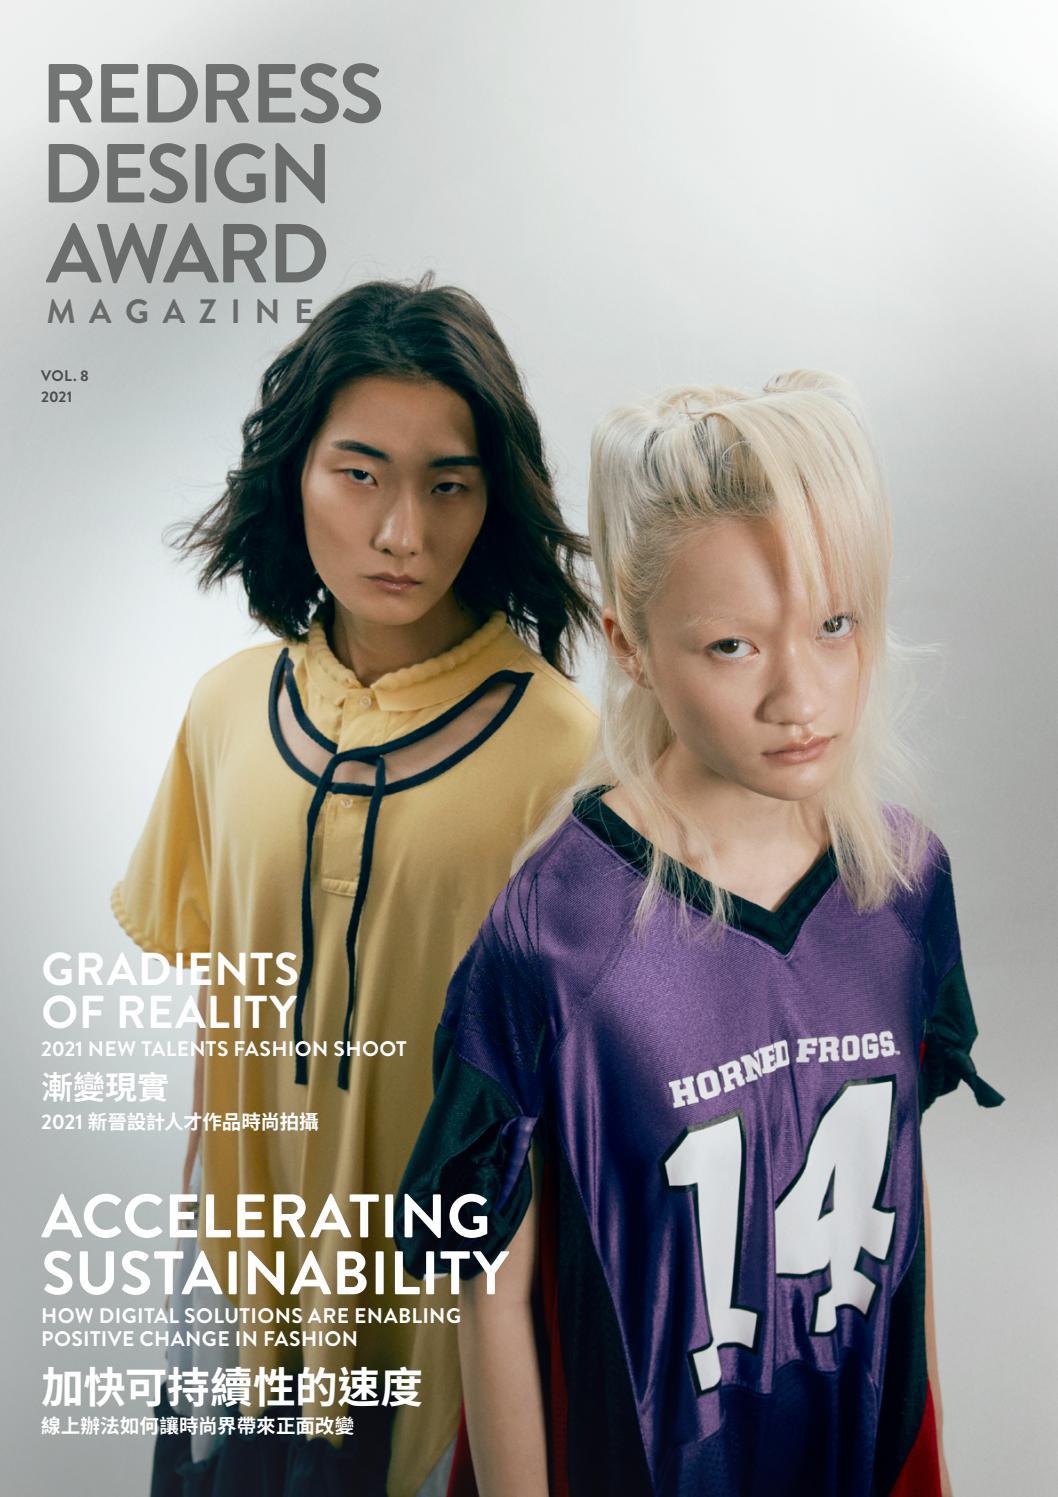 Redress Design Award 2021 Magazine